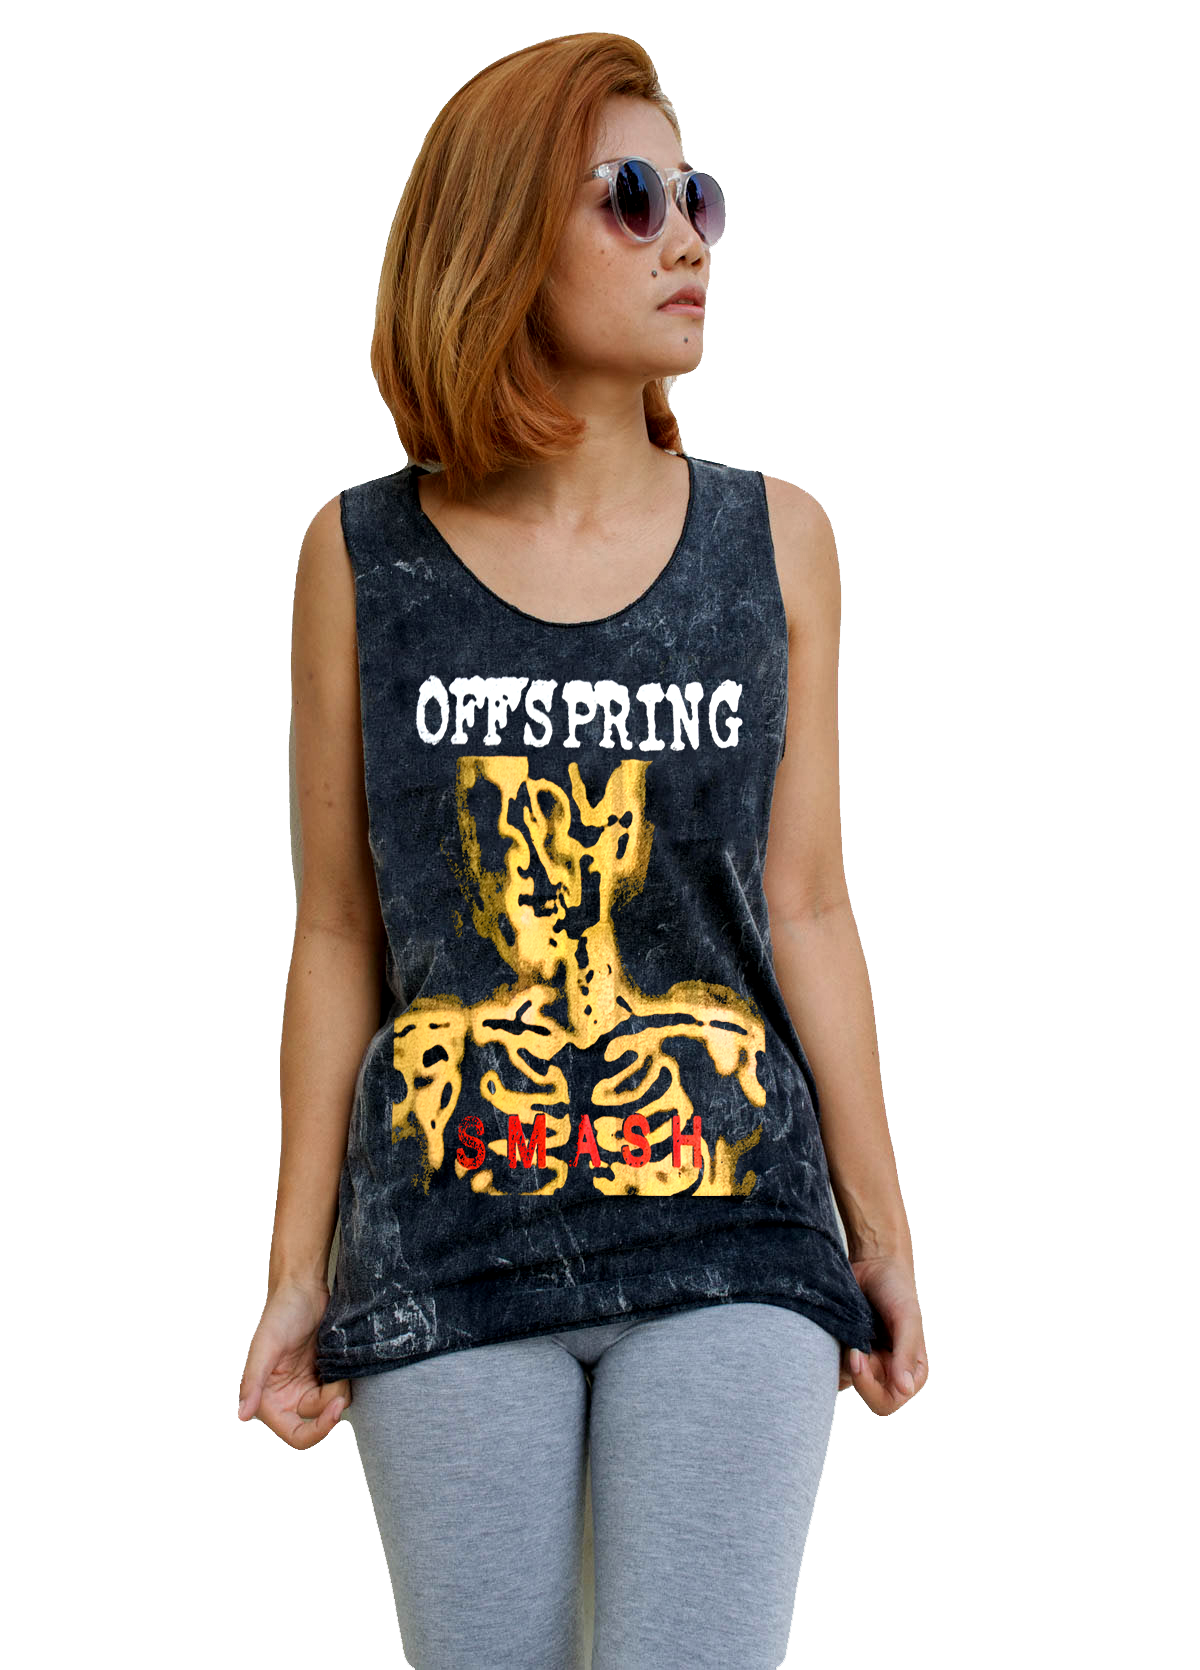 Unisex The Offspring Tank-Top Singlet vest Sleeveless T-shirt